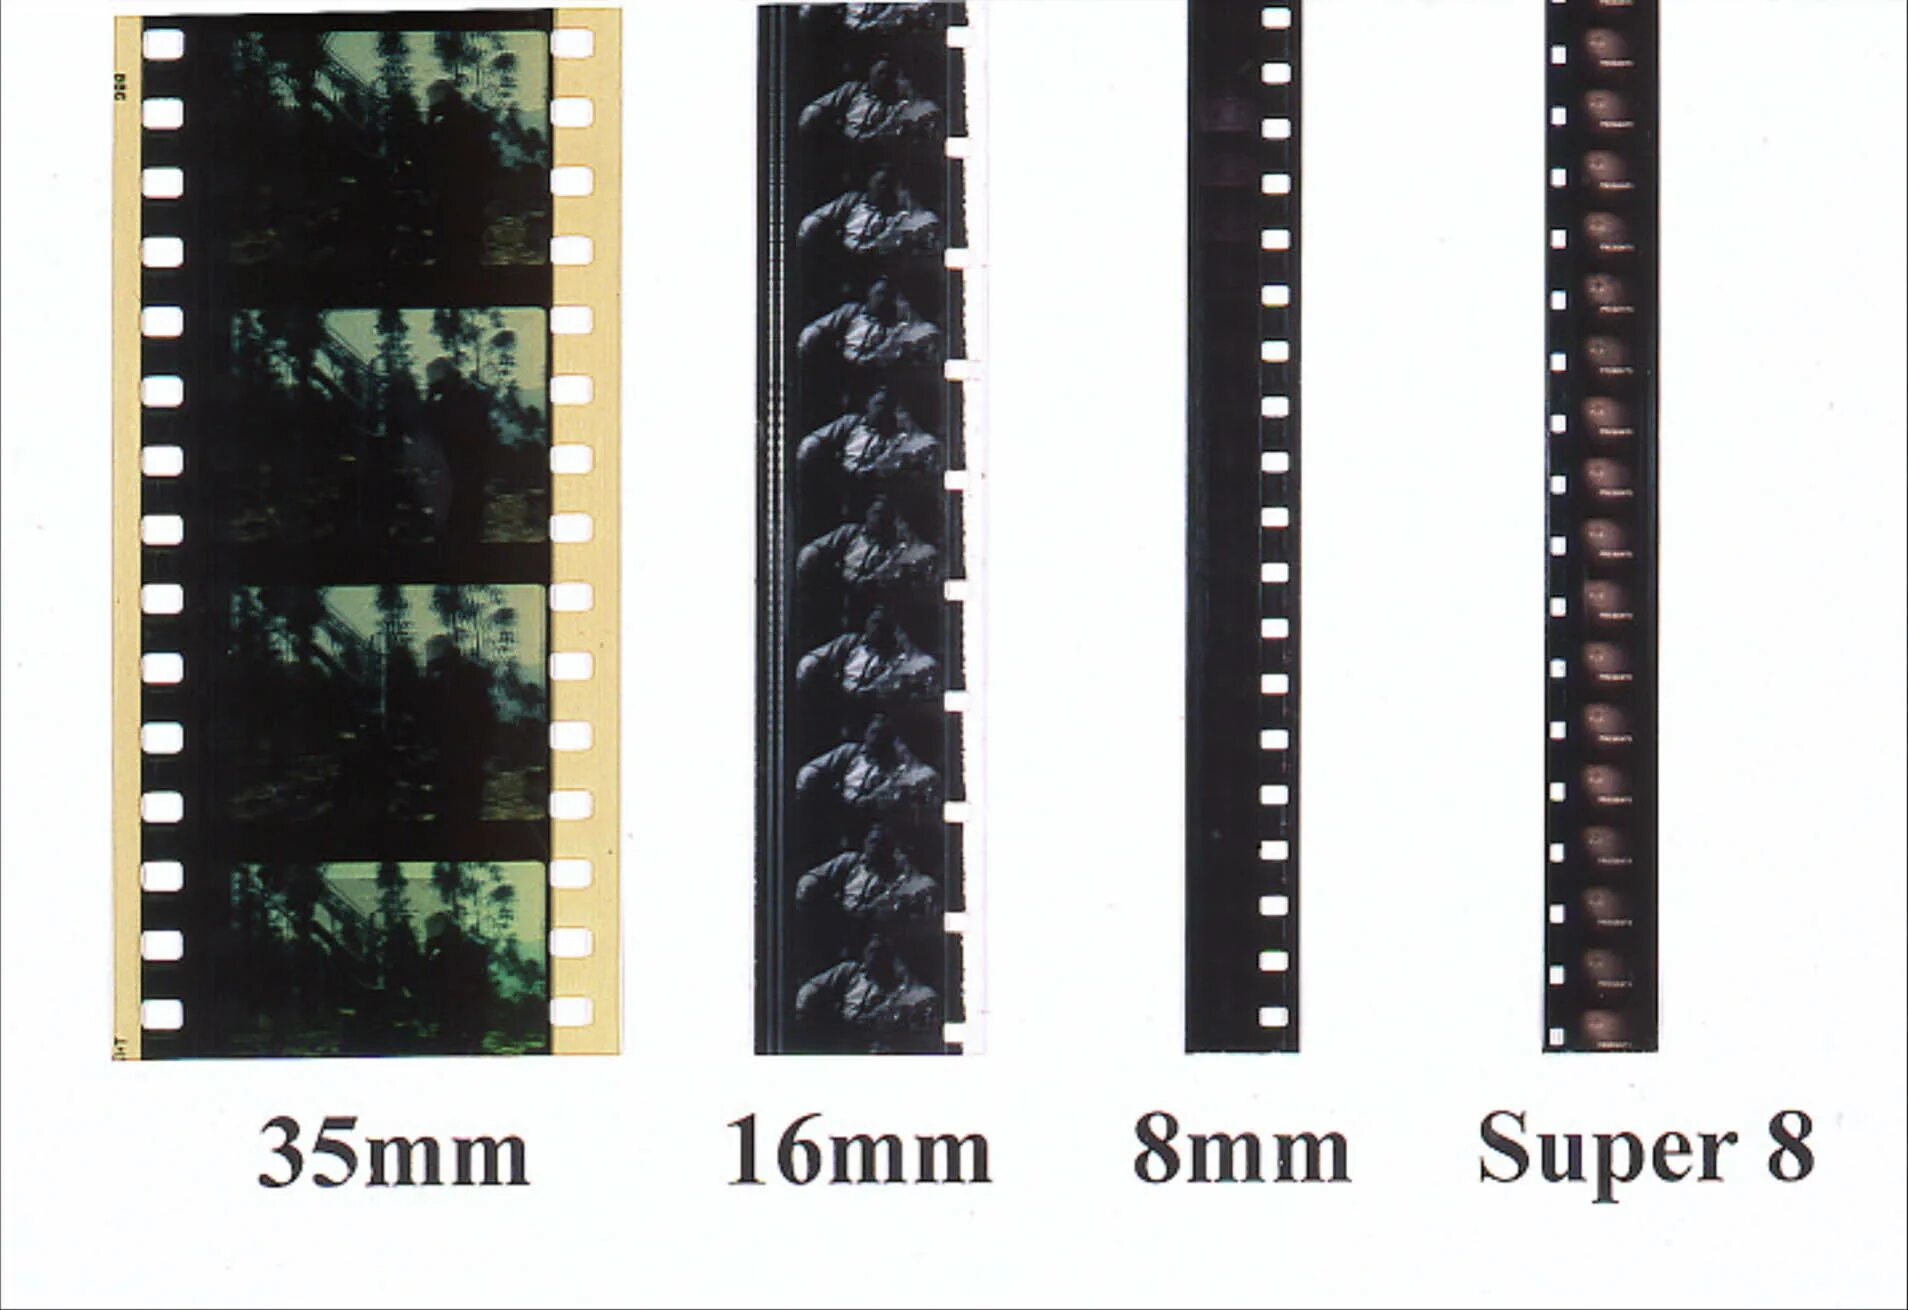 Киноплёнка super 8 мм. Кинопленка Kodak 35mm Кадр стандарт перфорации. Размер кадра 8 мм кинопленки. 35-Мм киноплёнка.